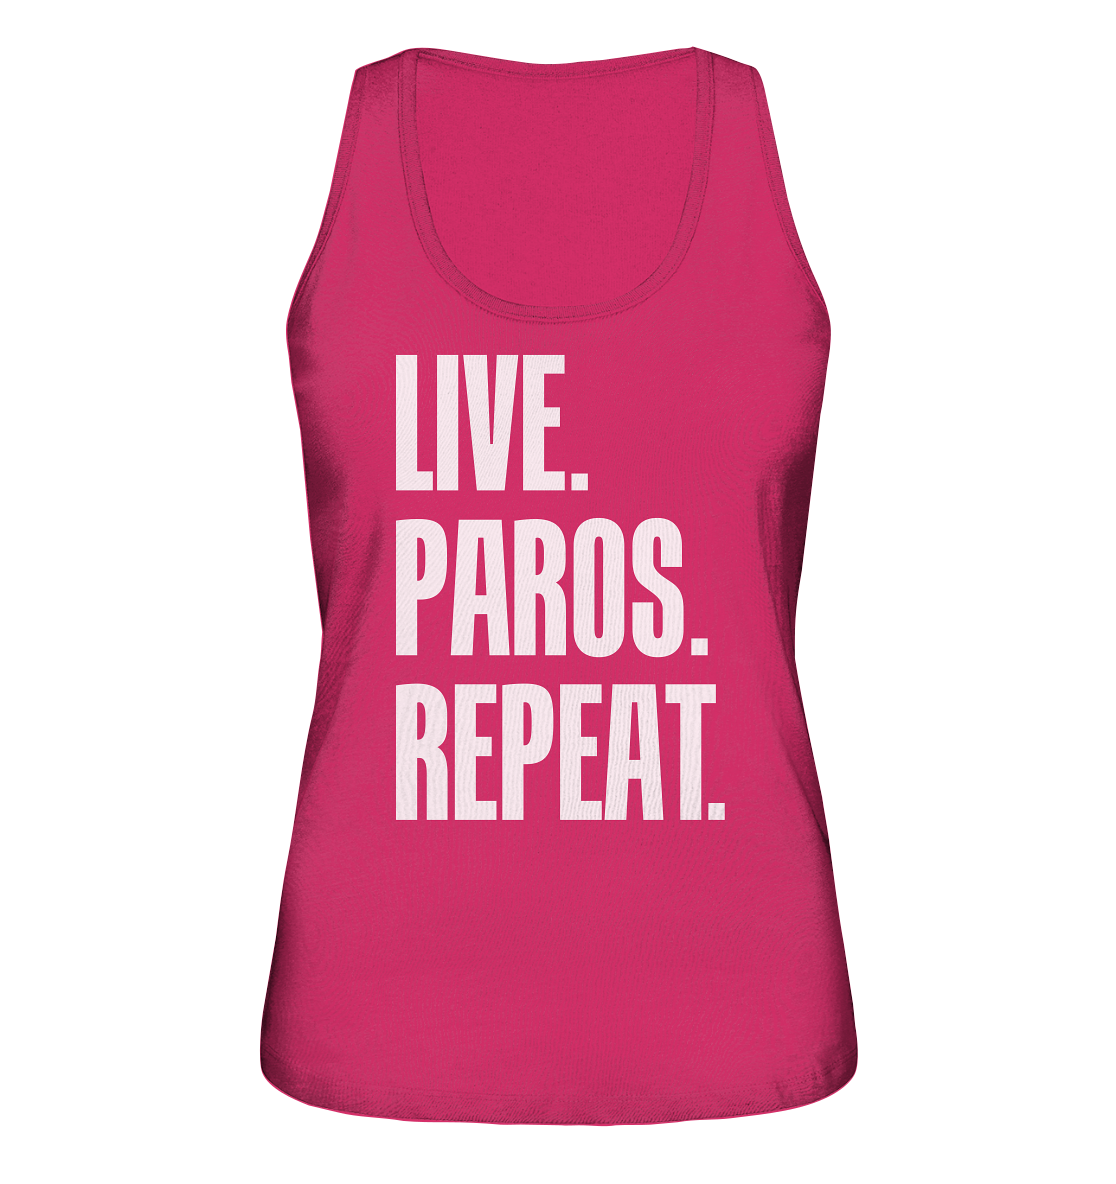 LIVE. PAROS. REPEAT. - Ladies organic tank top